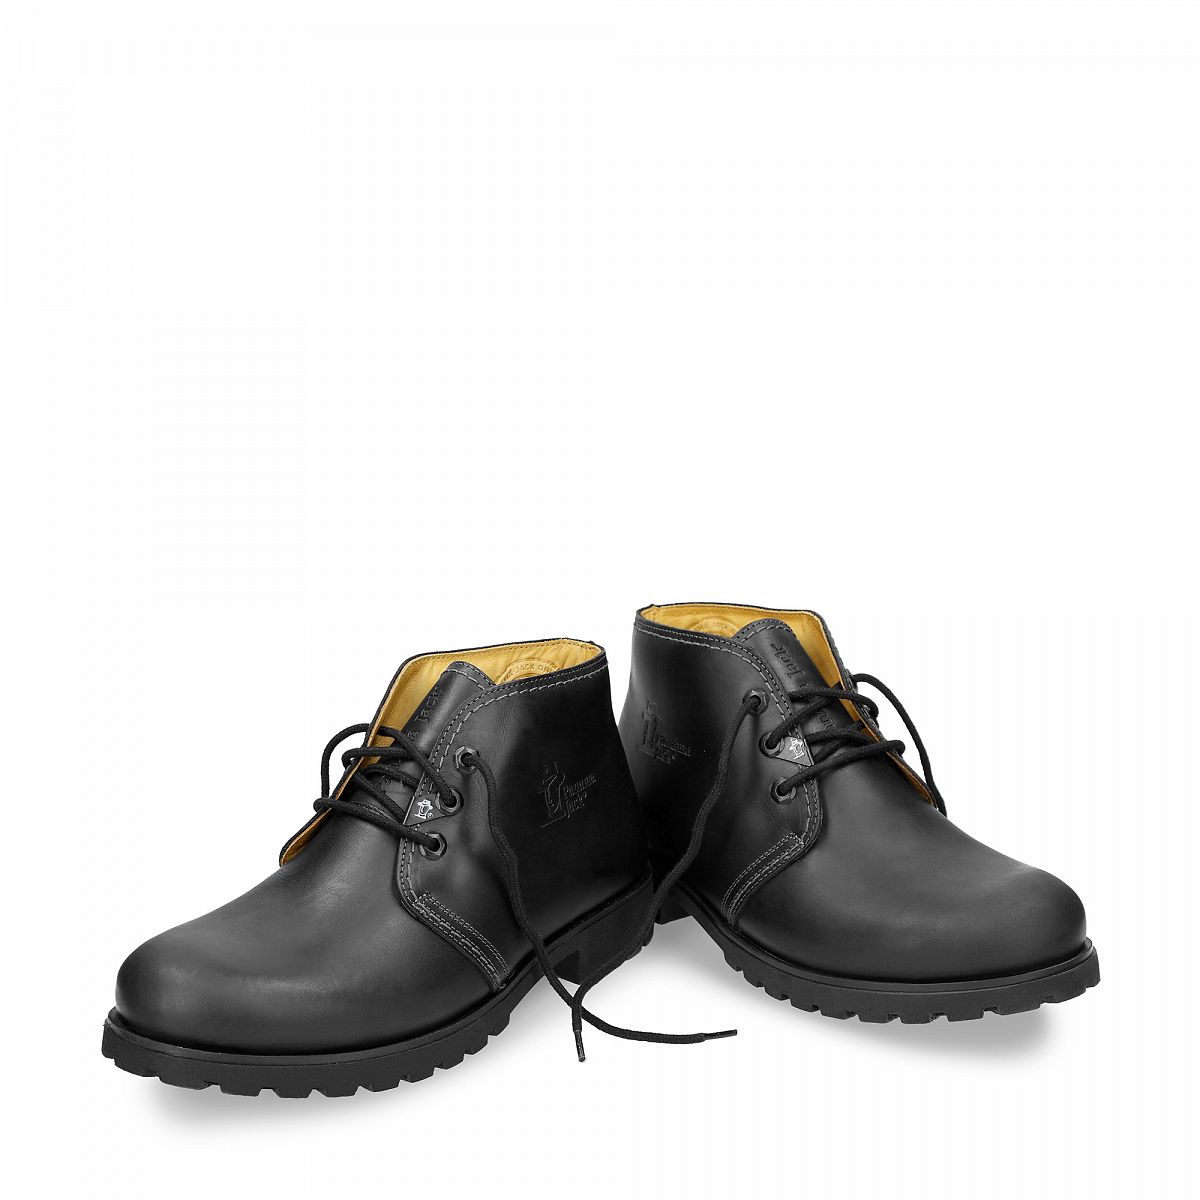 Bevestigen aan strak pk Ankle boot BOTA PANAMA | PANAMA JACK® Official